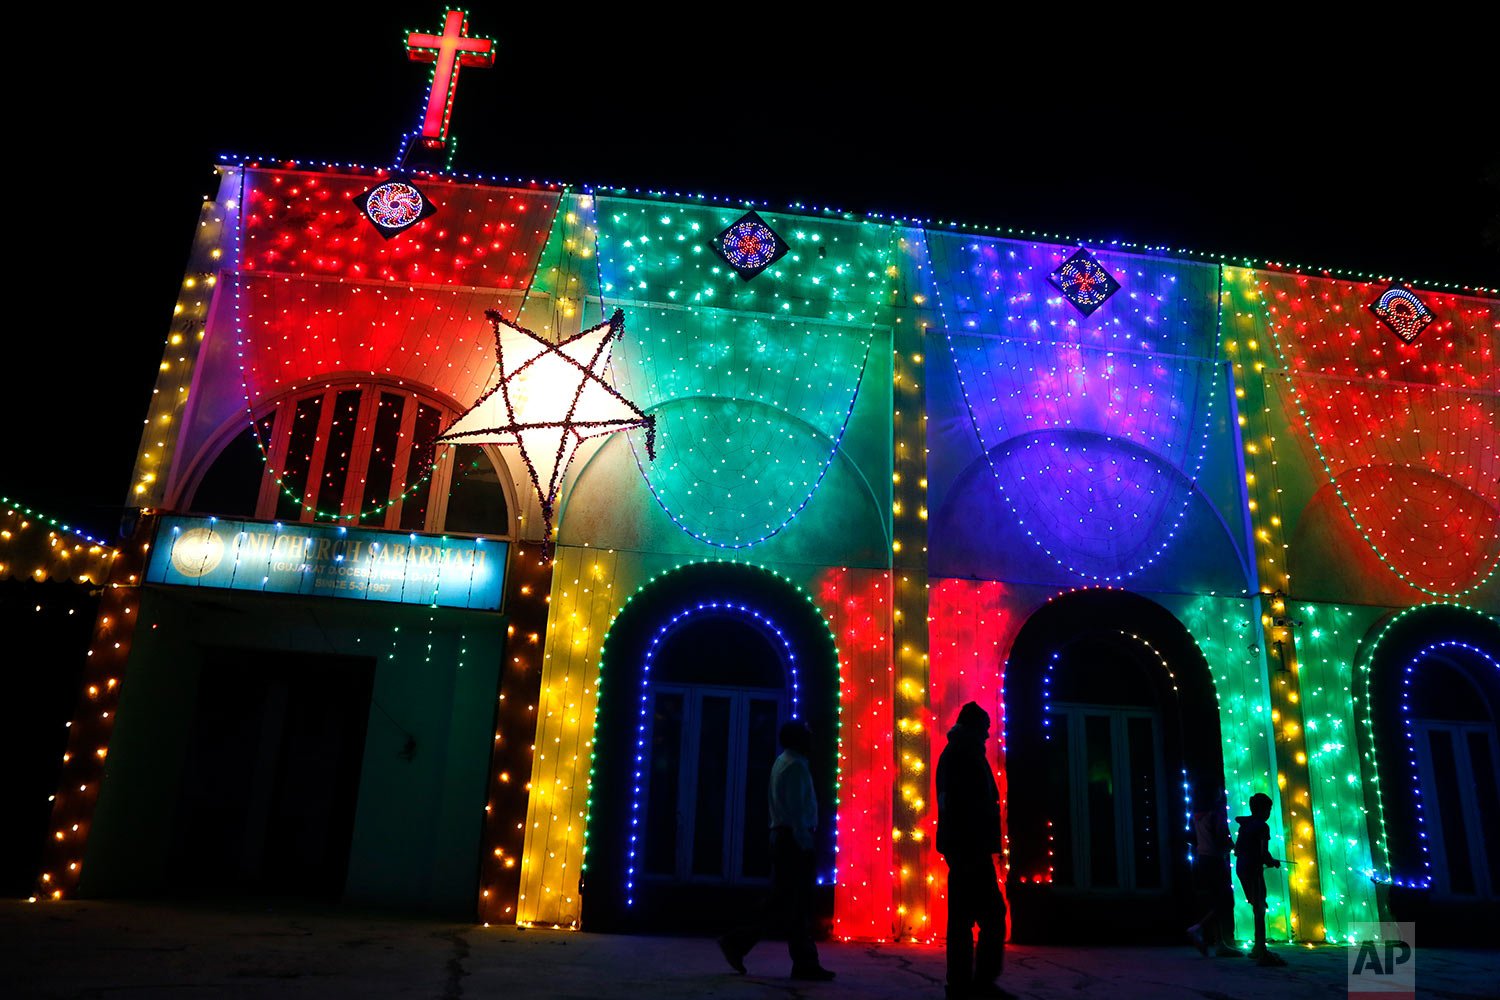  People walk past an illuminated church ahead of Christmas in Ahmedabad, India, Wednesday, Dec. 22, 2021. (AP Photo/Ajit Solanki) 